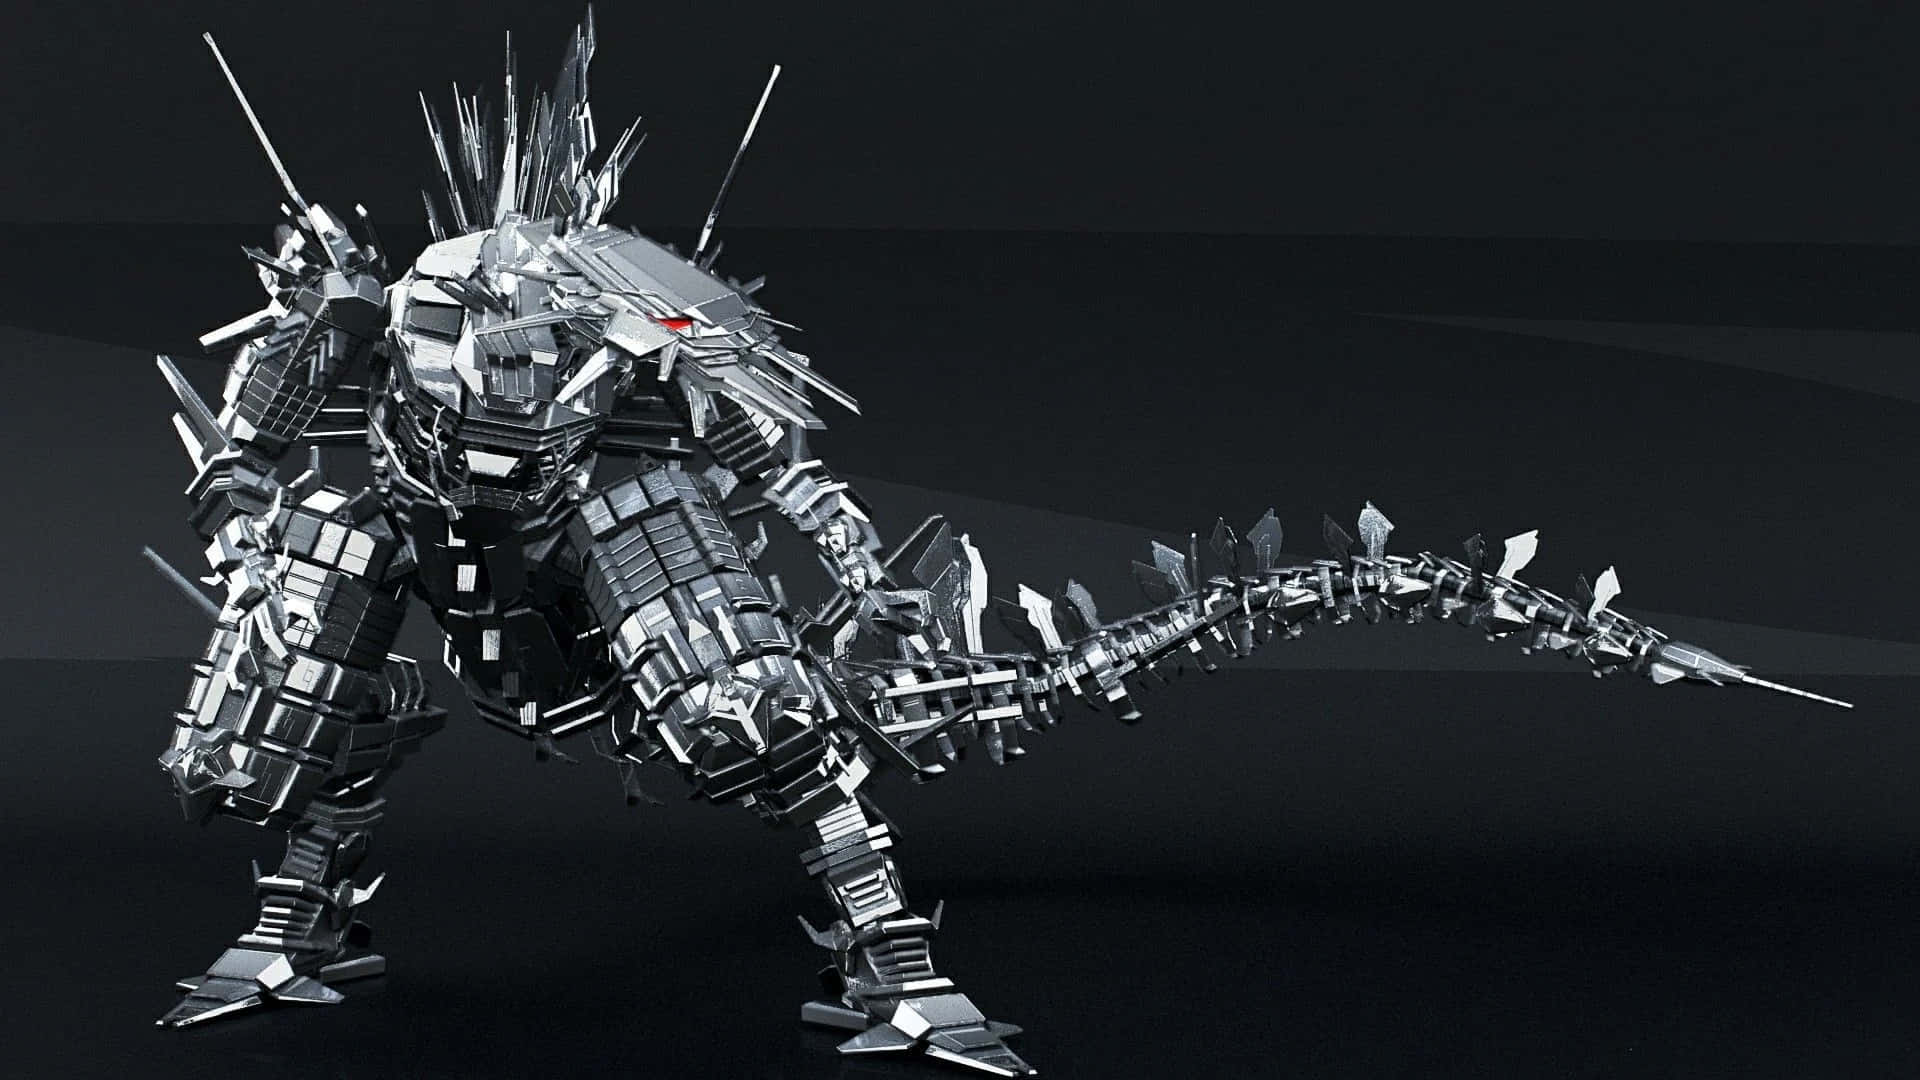 Epic battle between Robot Godzilla and its nemesis in a futuristic city Wallpaper